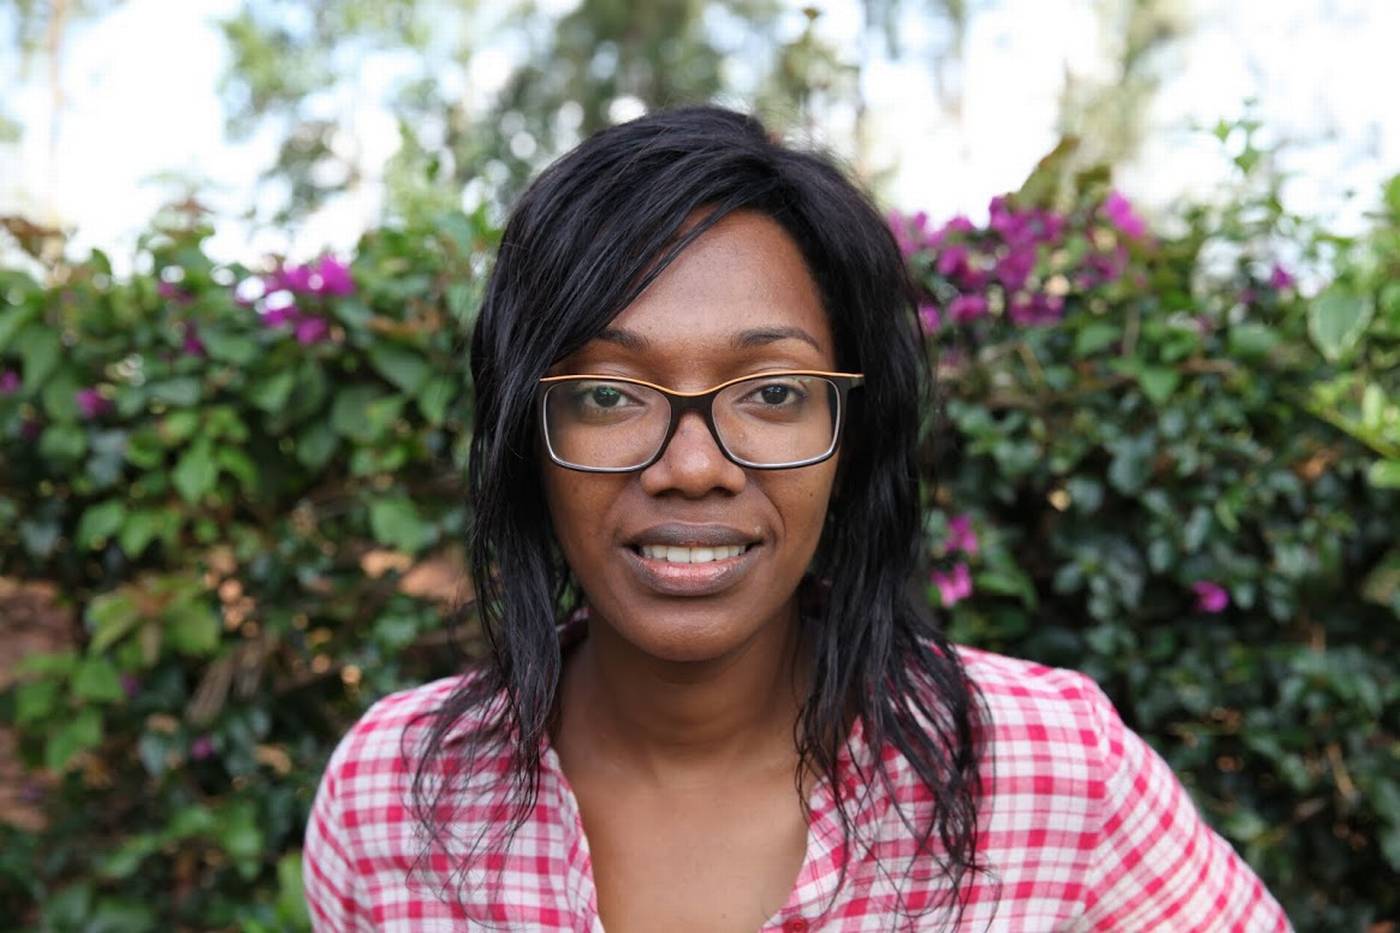 Shemale Forced Girl Sex - Kenya's transgender warrior: from suicide bid to celebrity